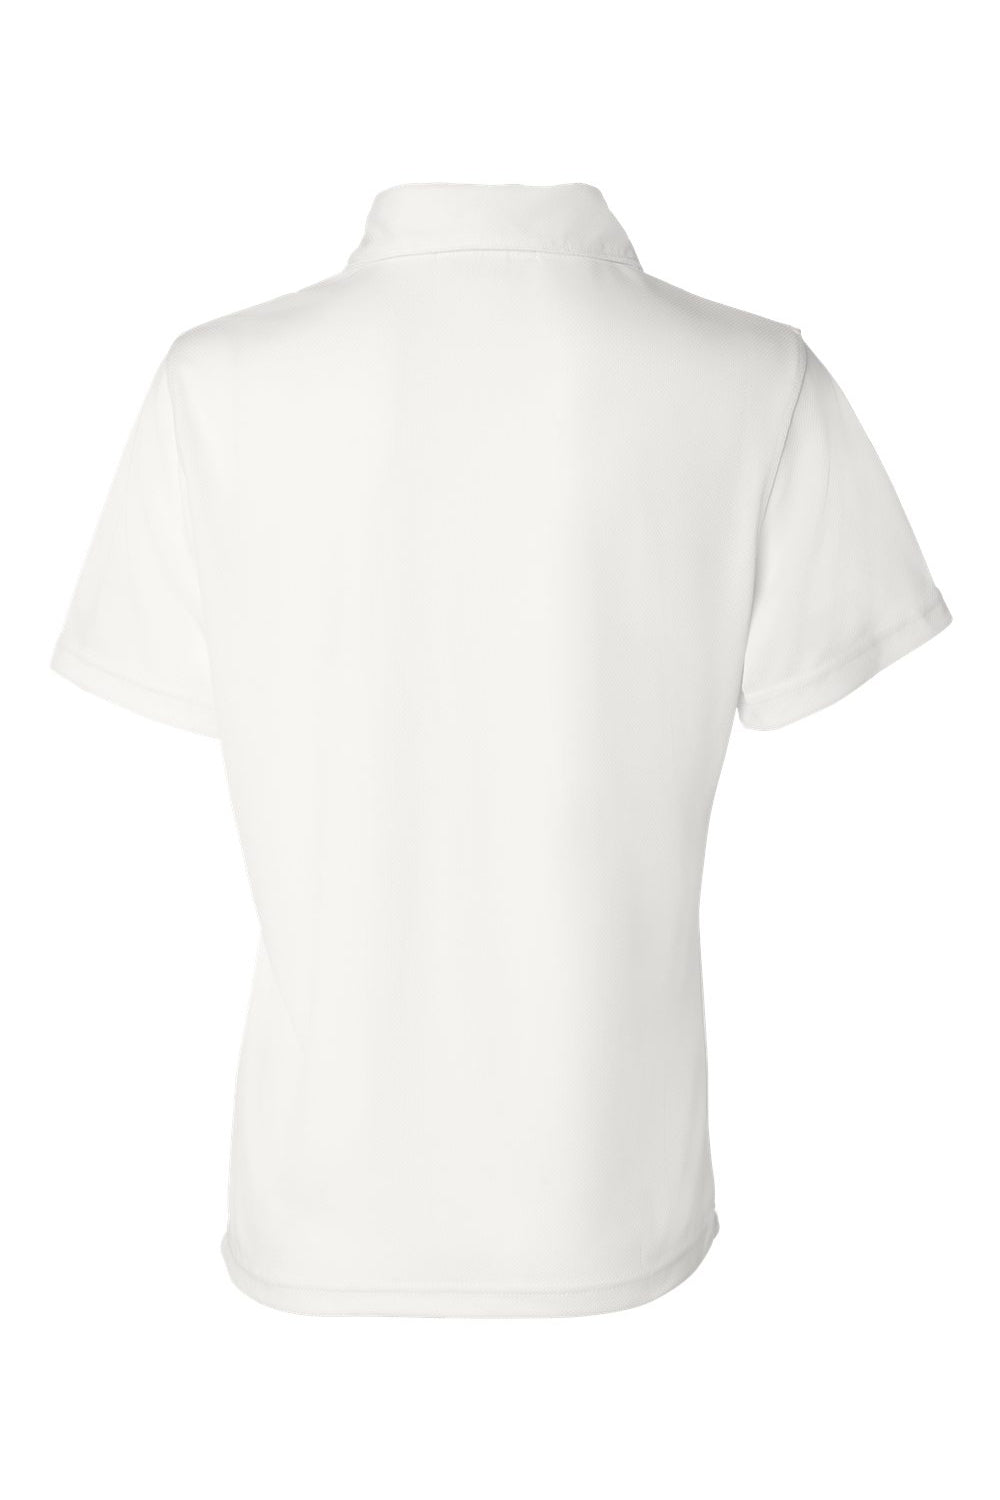 Sierra Pacific 5469 Womens Moisture Wicking Mesh Short Sleeve Polo Shirt White Flat Back